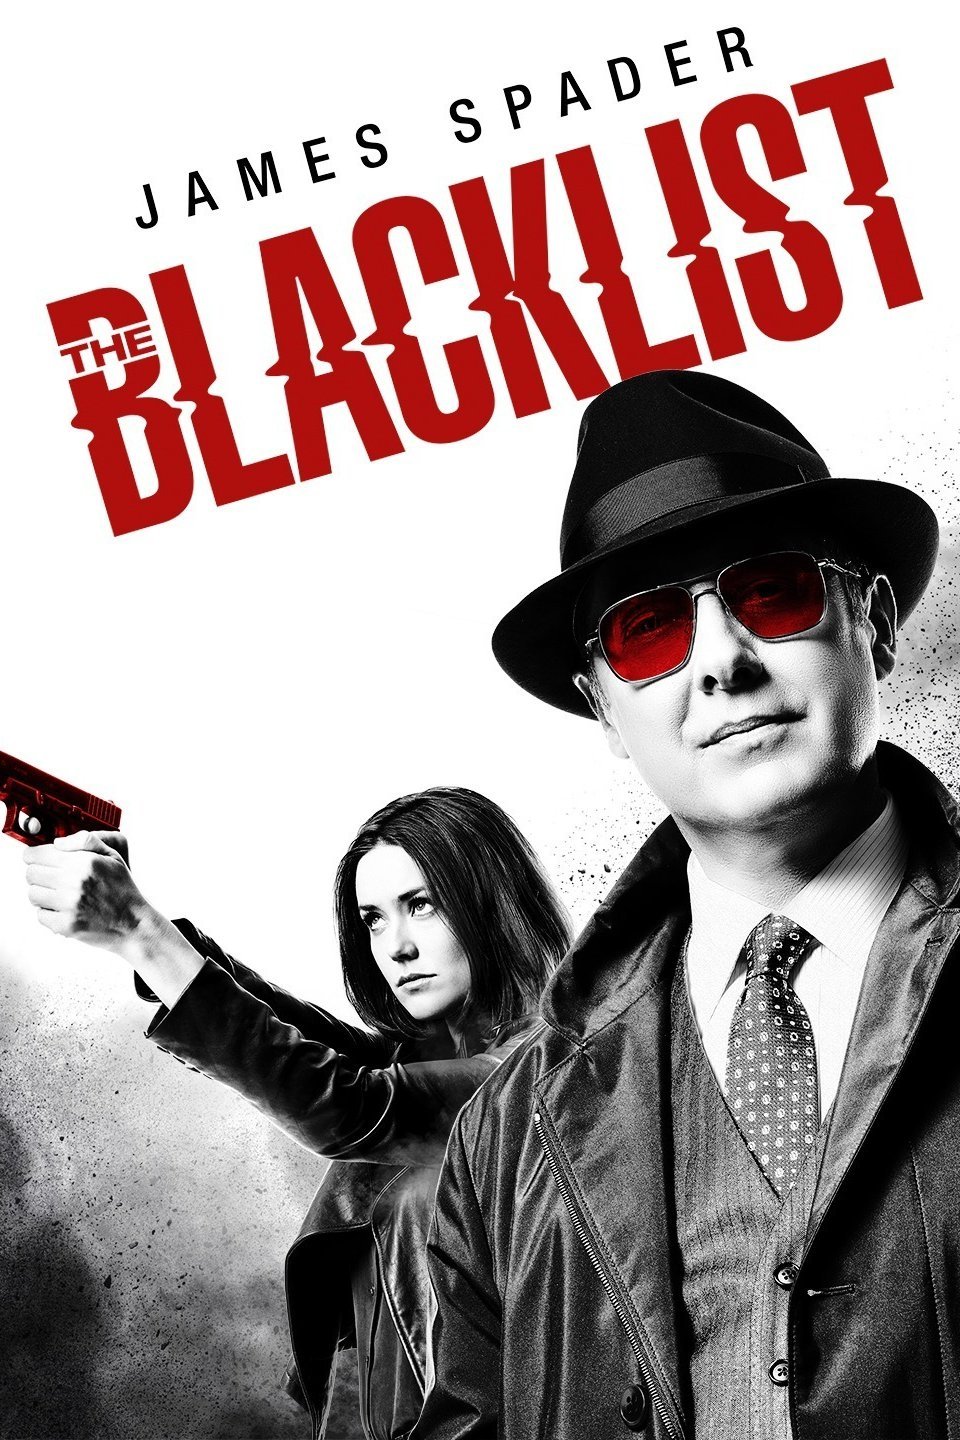 the blacklist season 3 complete download